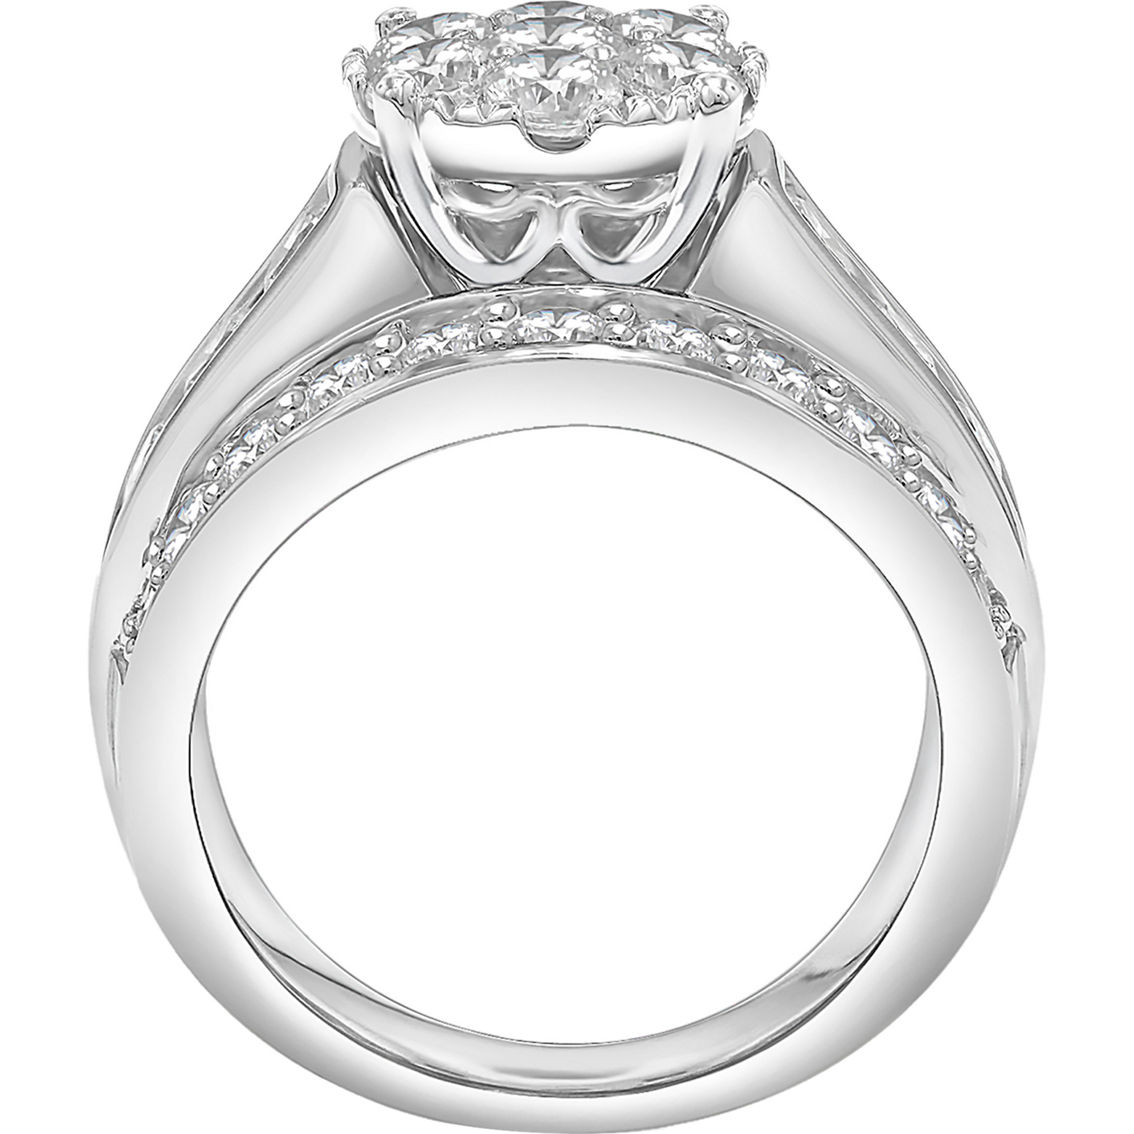 American Rose 10K White Gold 3 CTW Diamond Ring Size 7 - Image 3 of 4